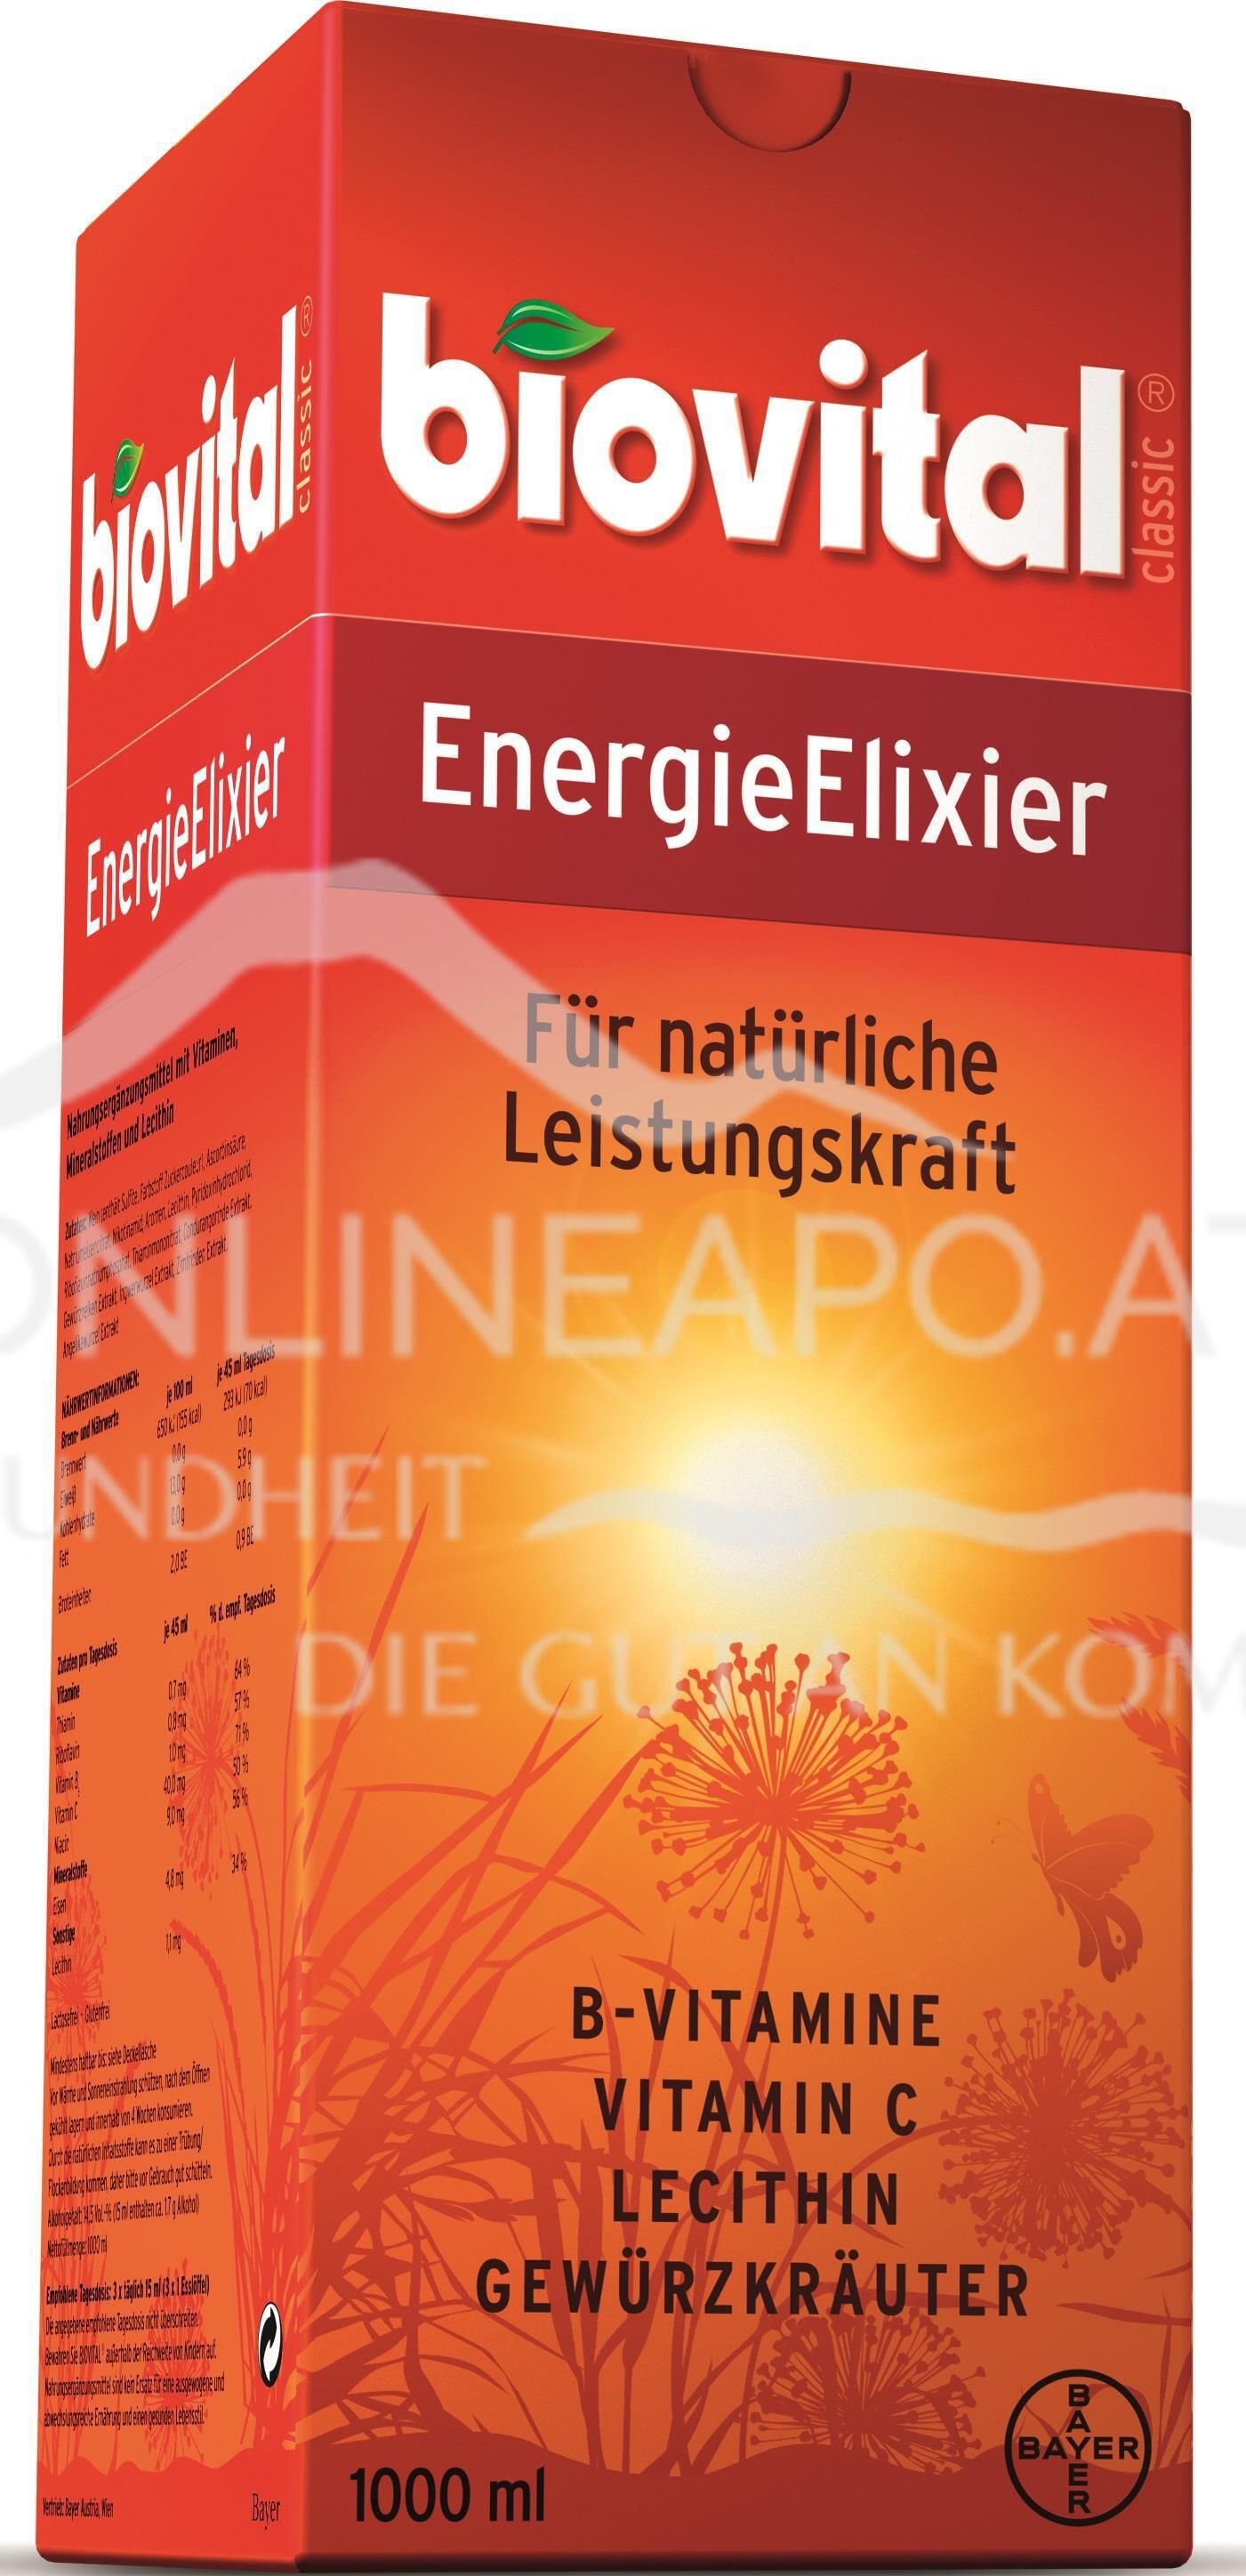 Biovital® Energie Elixier